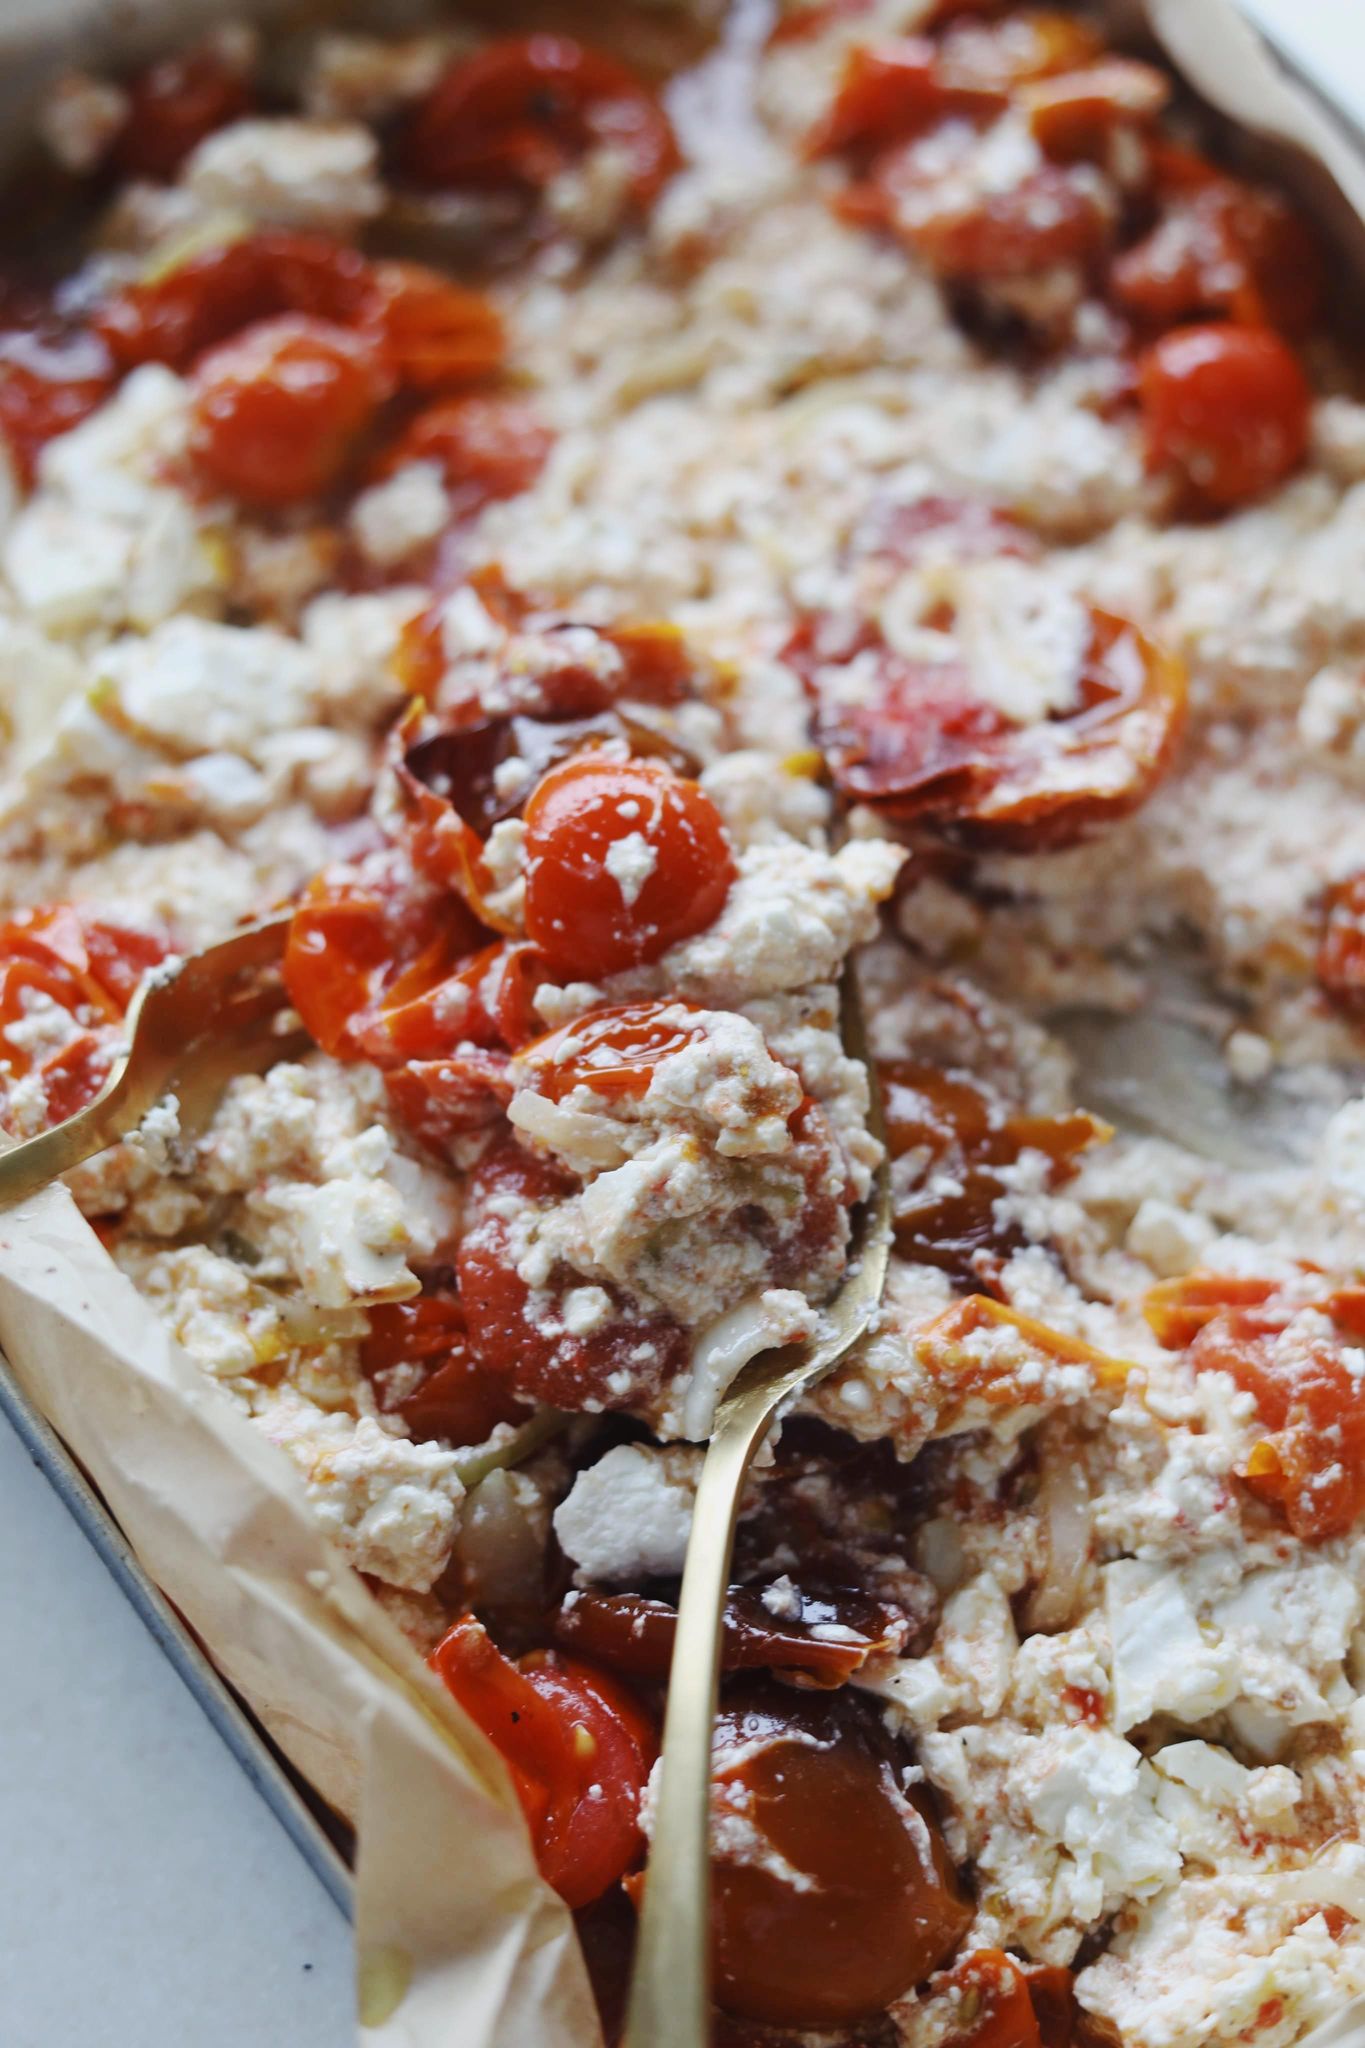 Bagt feta med tomater og pasta